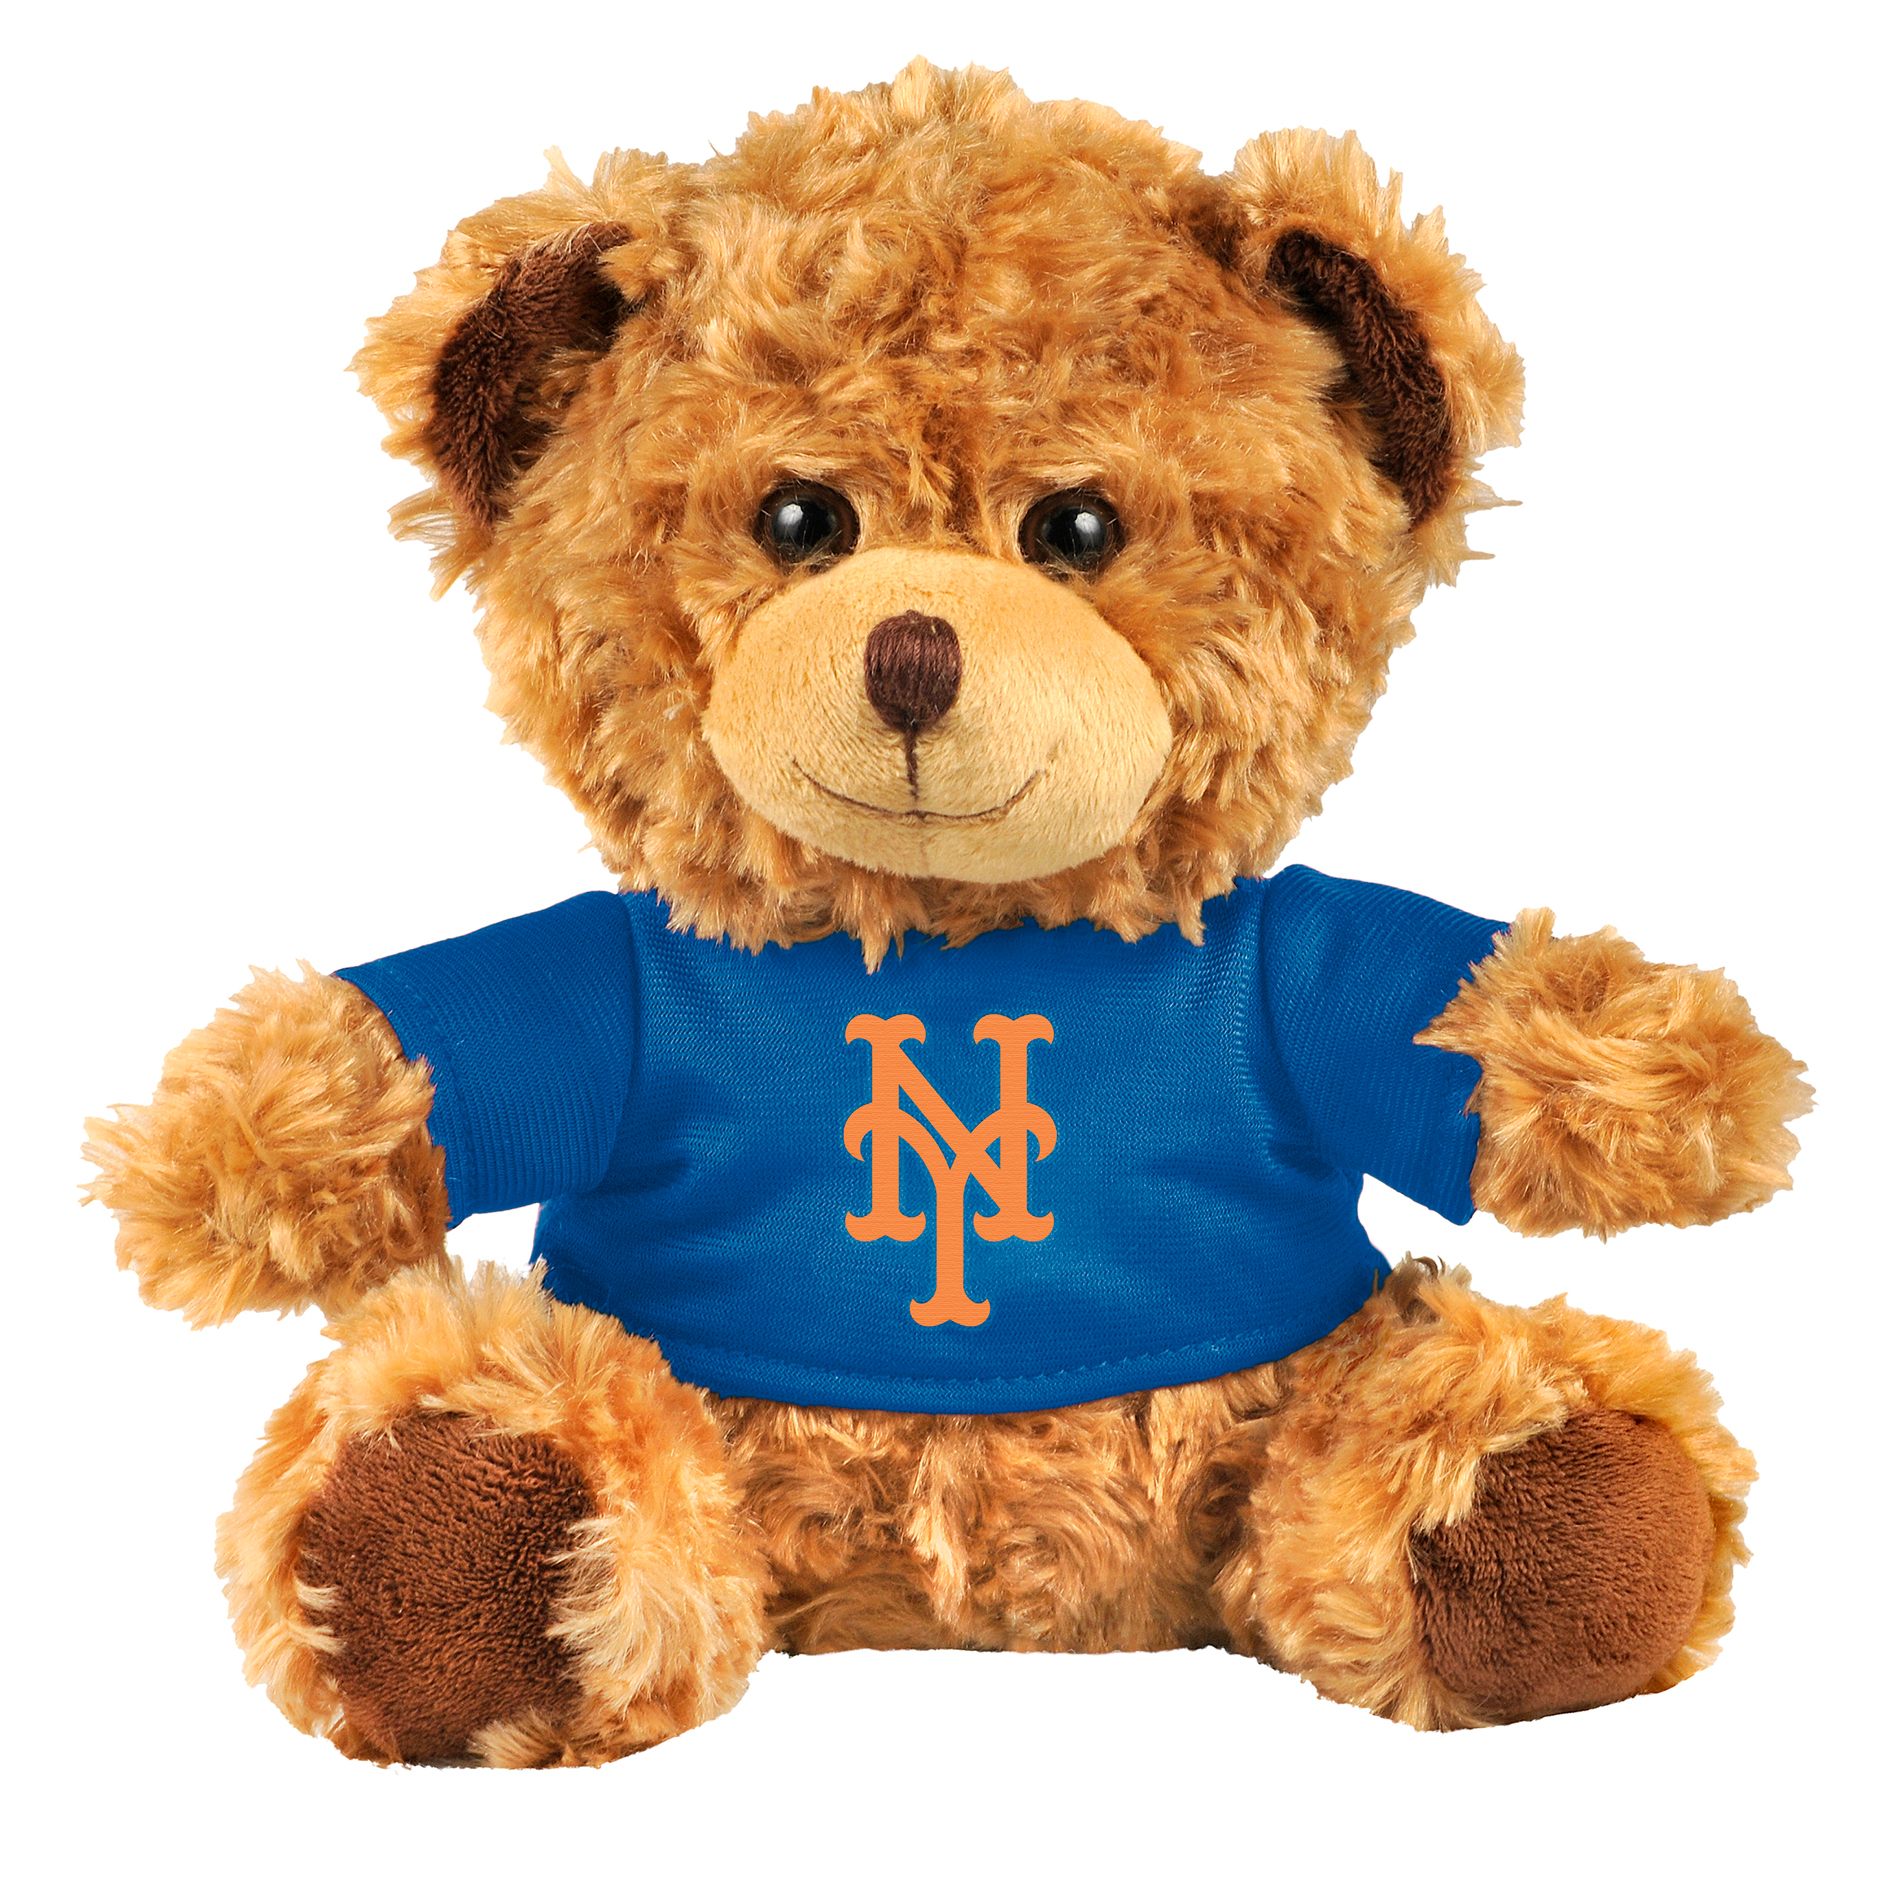 MLB Plush Teddy Bear - New York Mets